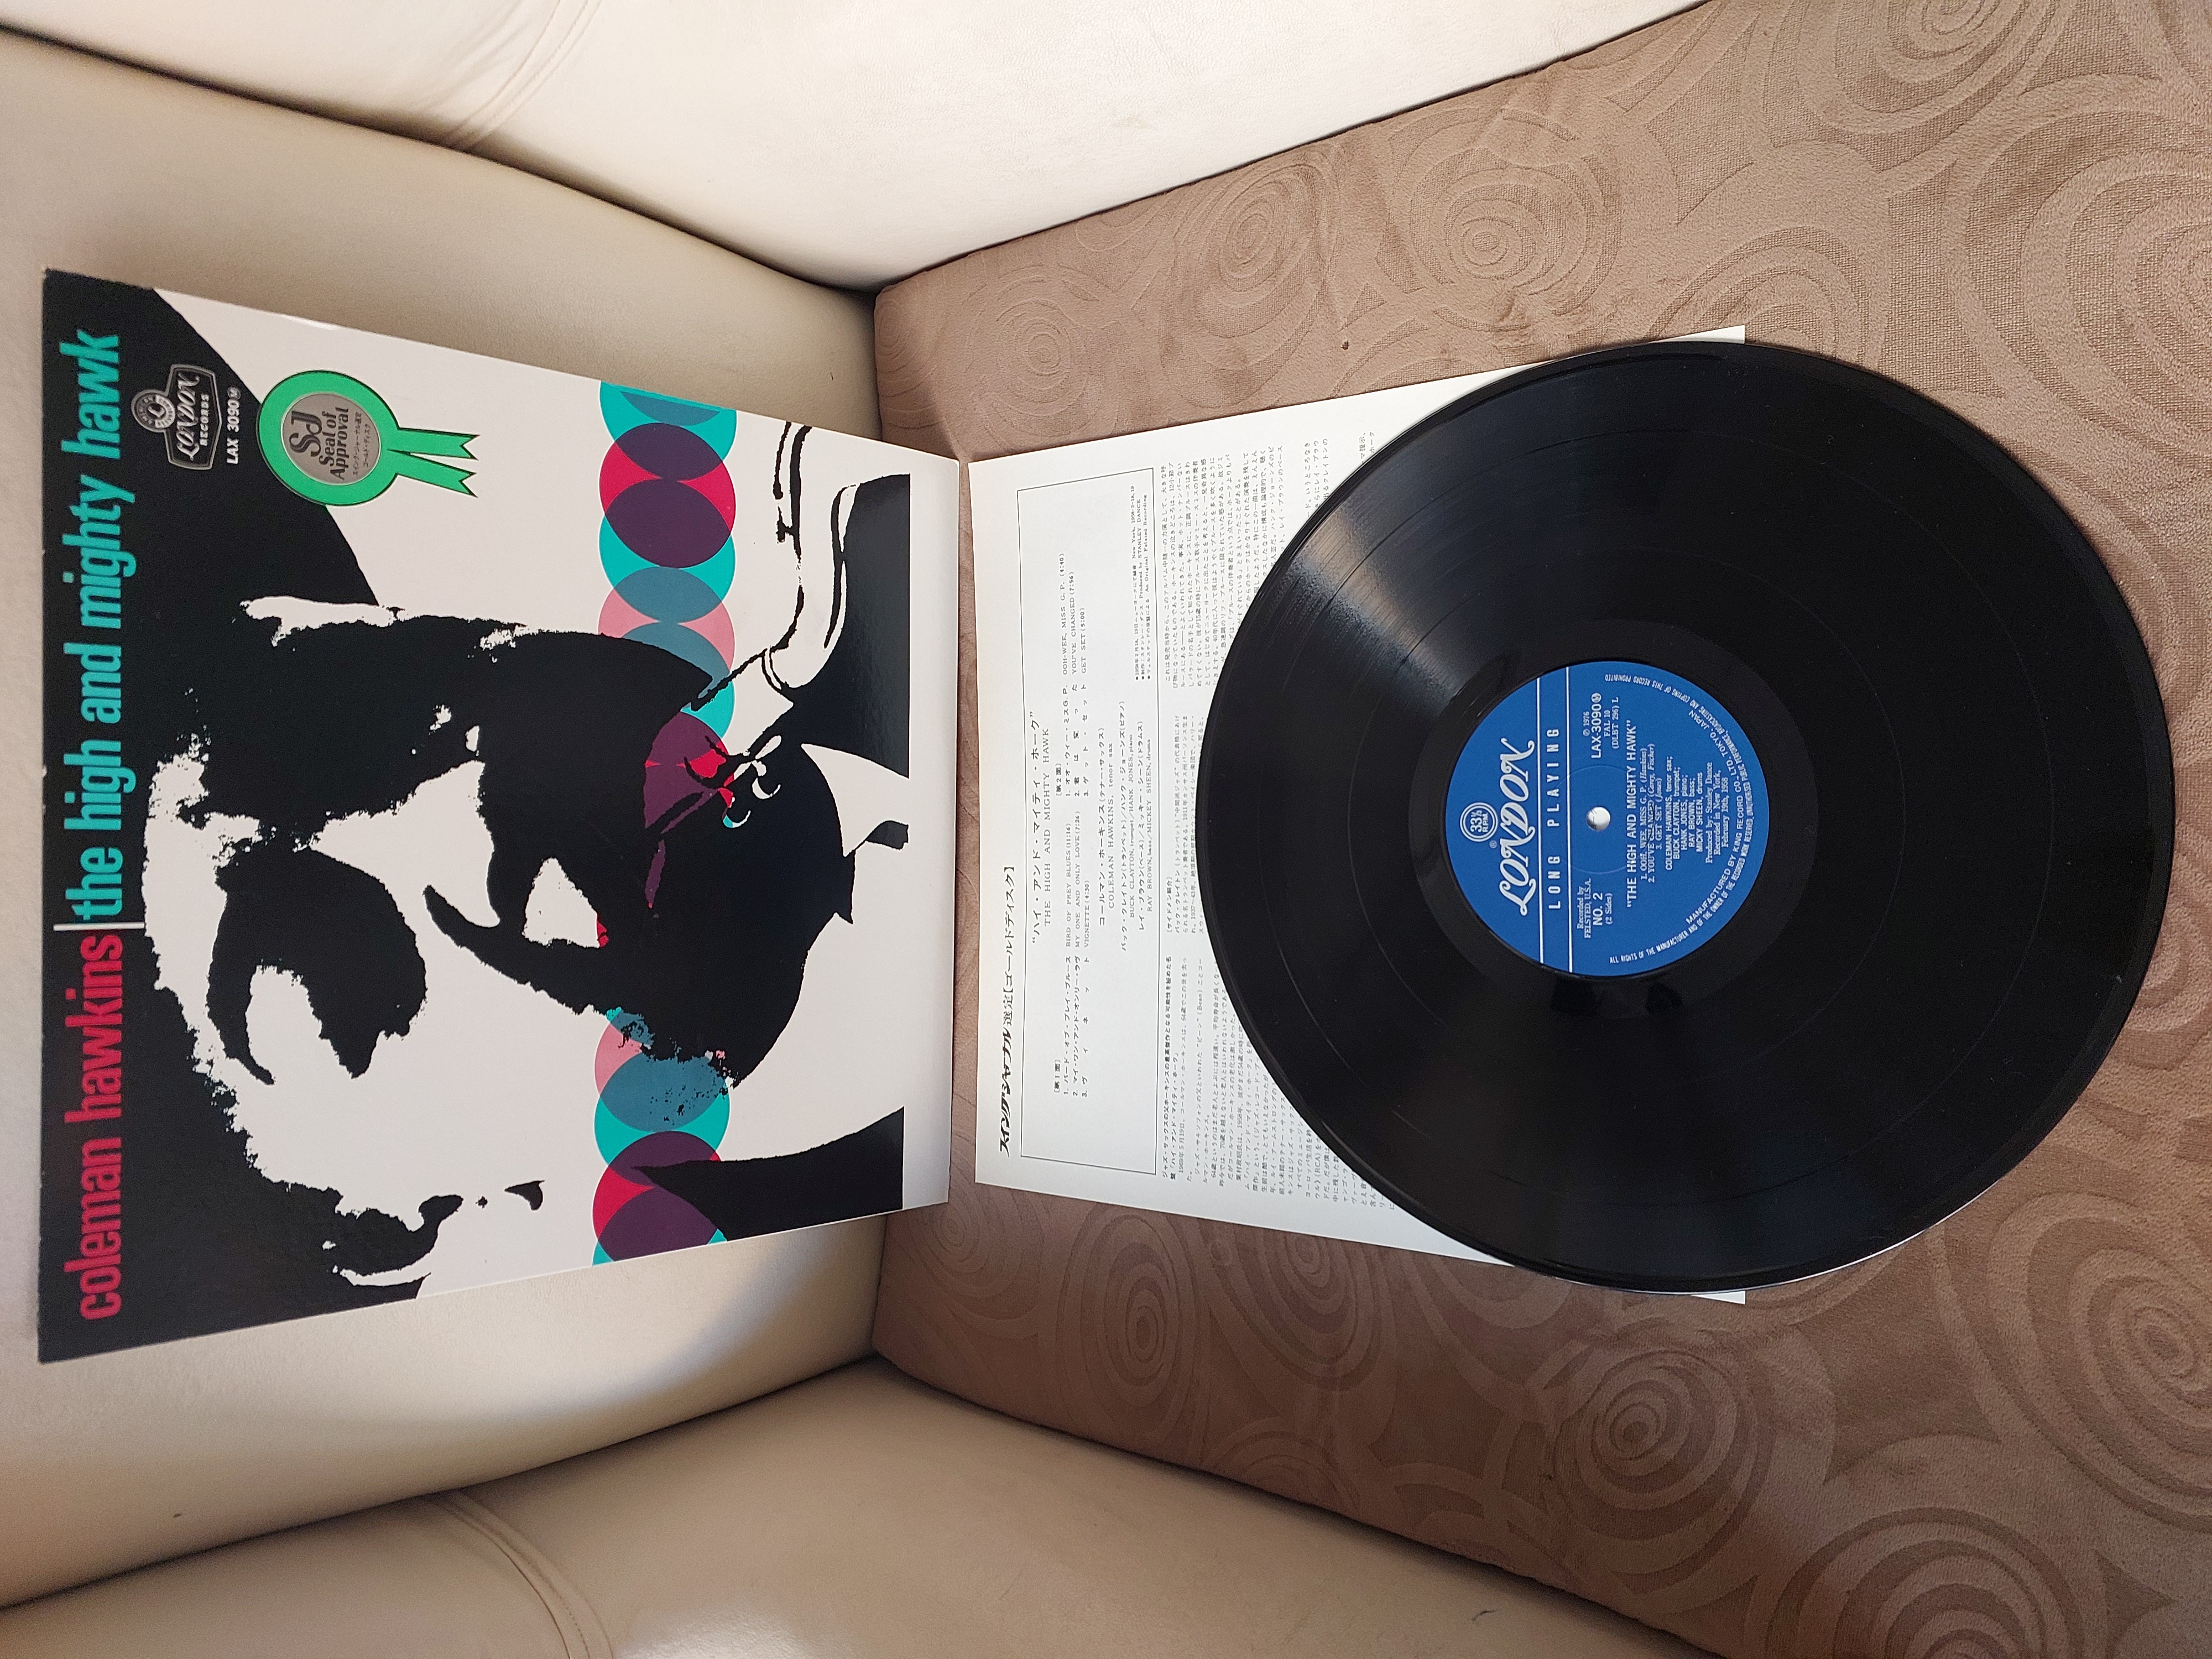 Coleman Hawkins – The High And Mighty Hawk -1976 Japonya Basım Albüm -33 lük LP Plak Obisiz